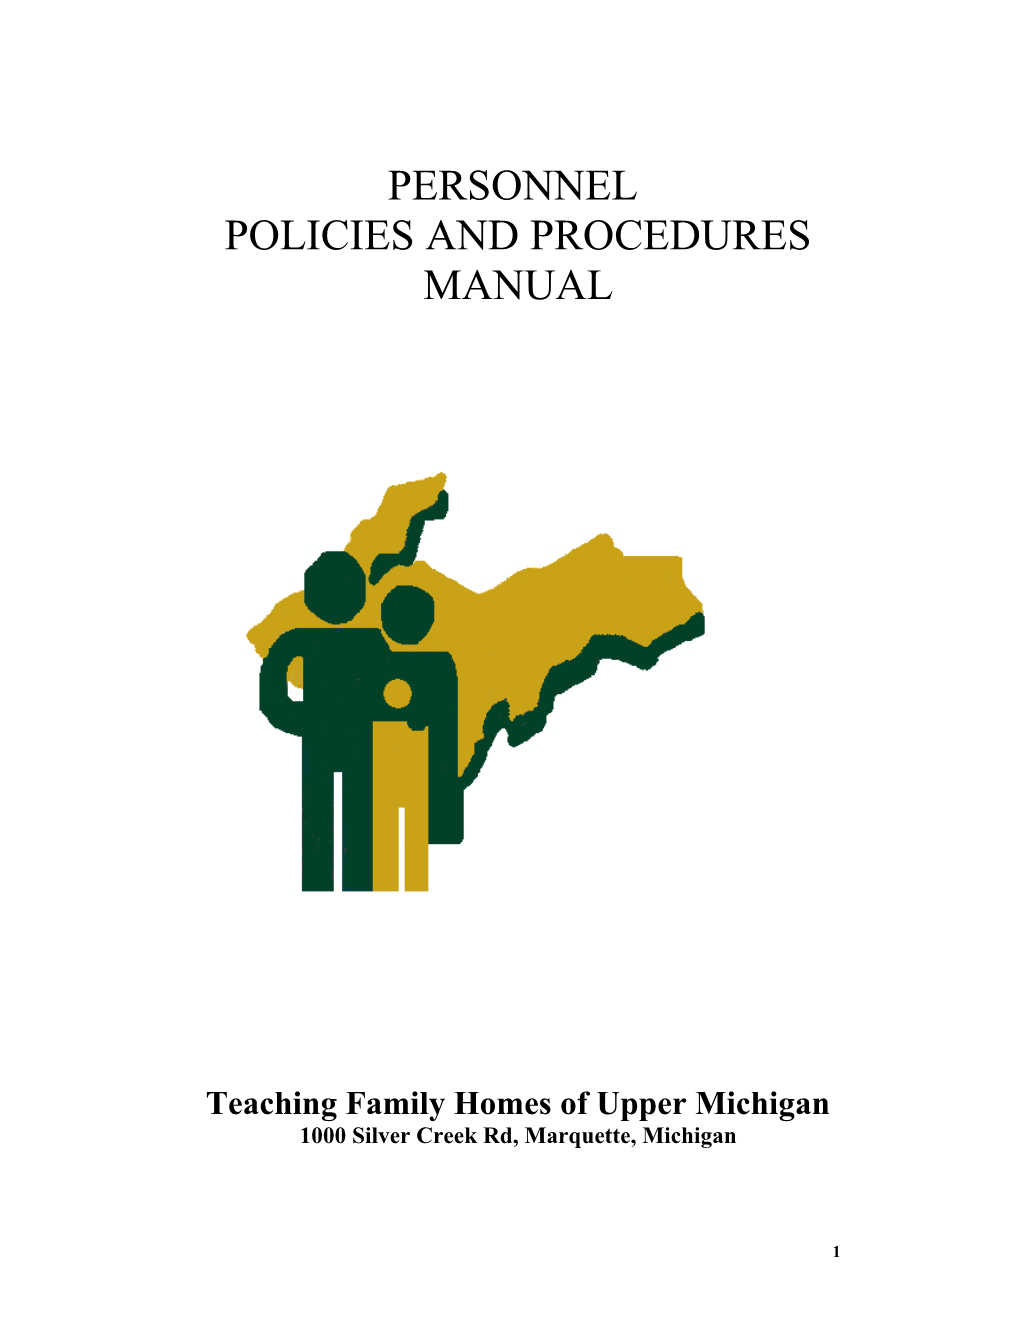 Teaching Family Homes of Upper Michigan